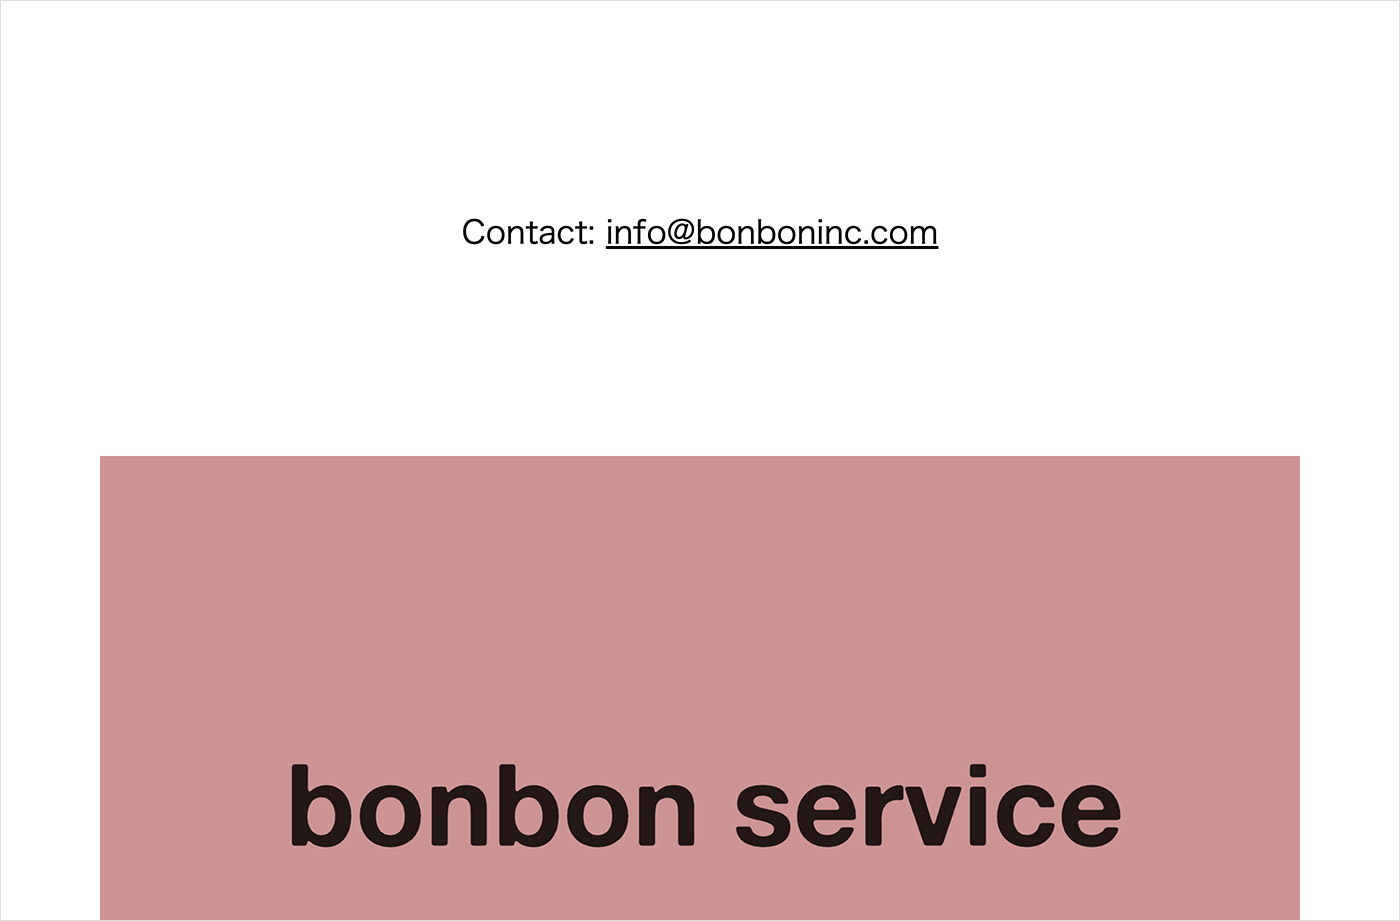 BONBON SERVICE inc.ウェブサイトの画面キャプチャ画像